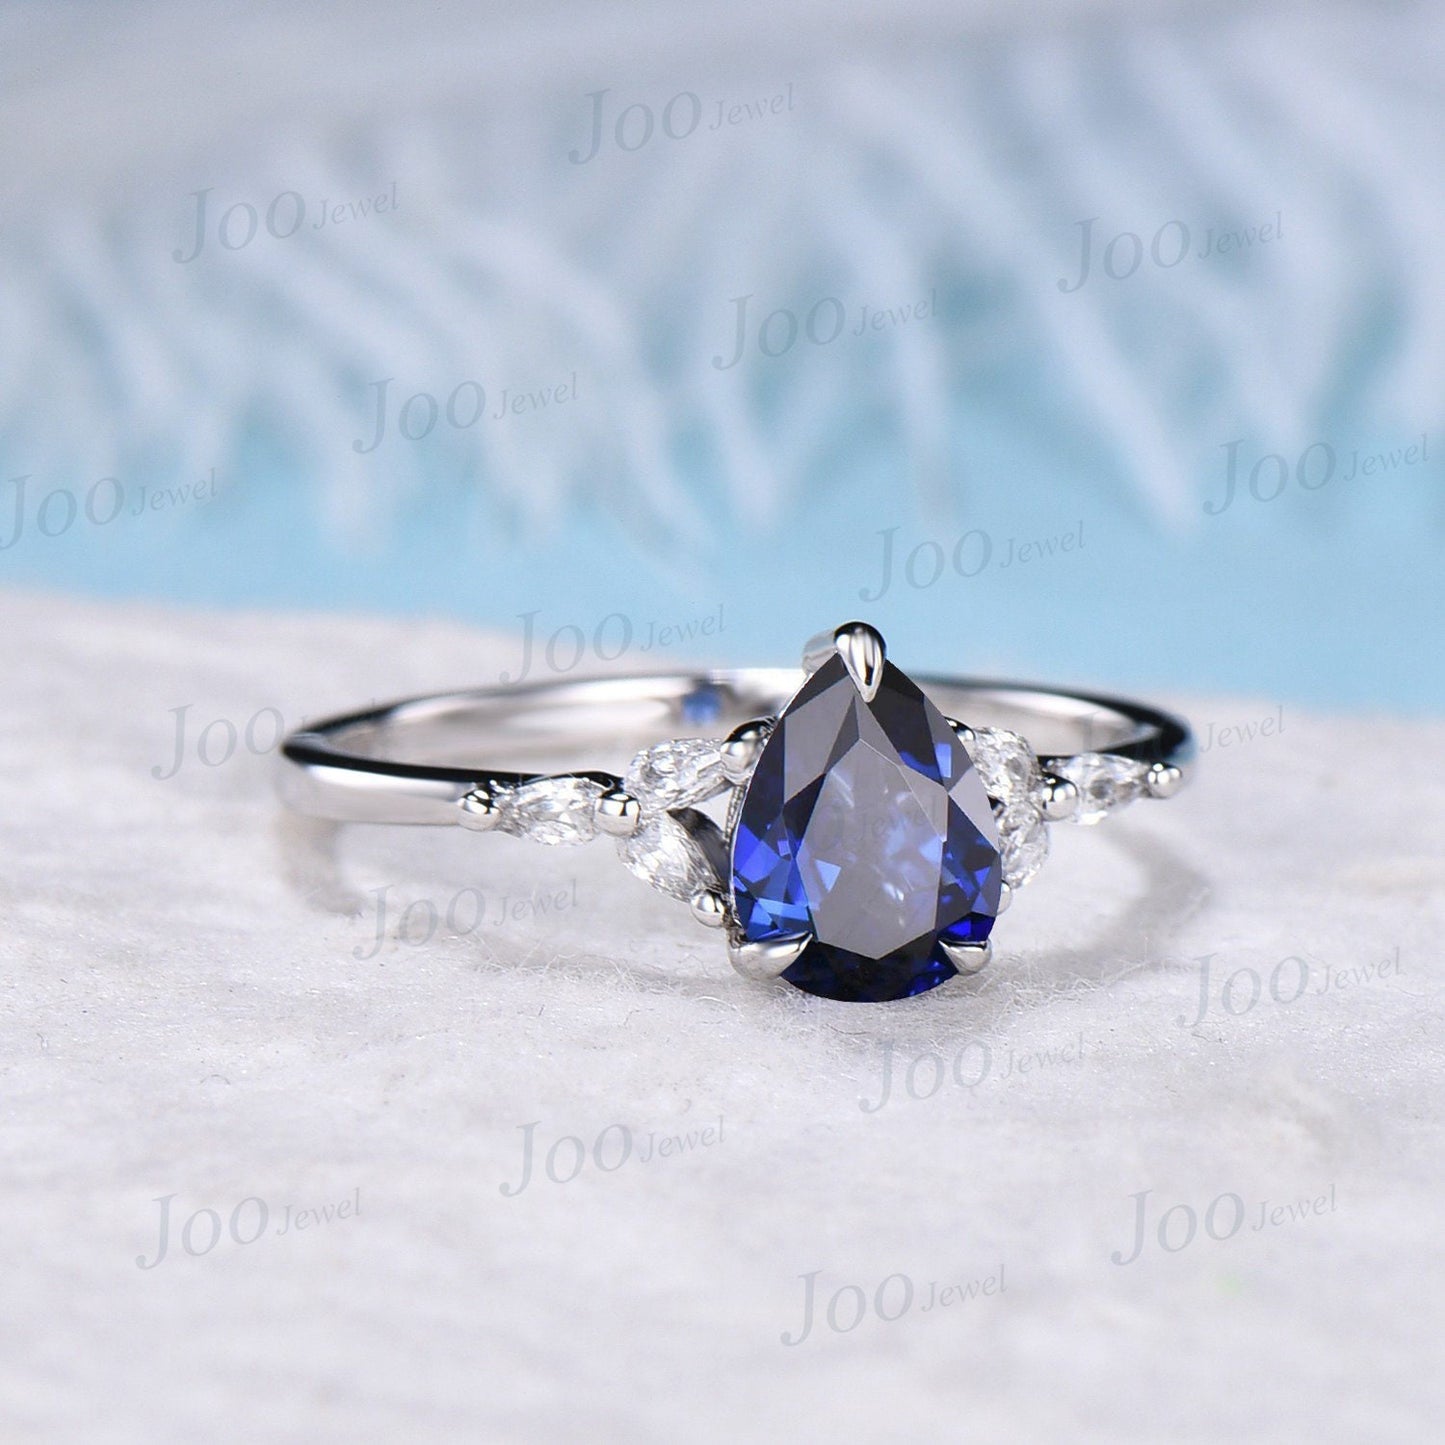 Sterling Silver Blue Sapphire Engagement Rings 1.25ct Vintage Blue Gemstone Teardrop Ring September Birthstone Birthday Anniversary Gift Her